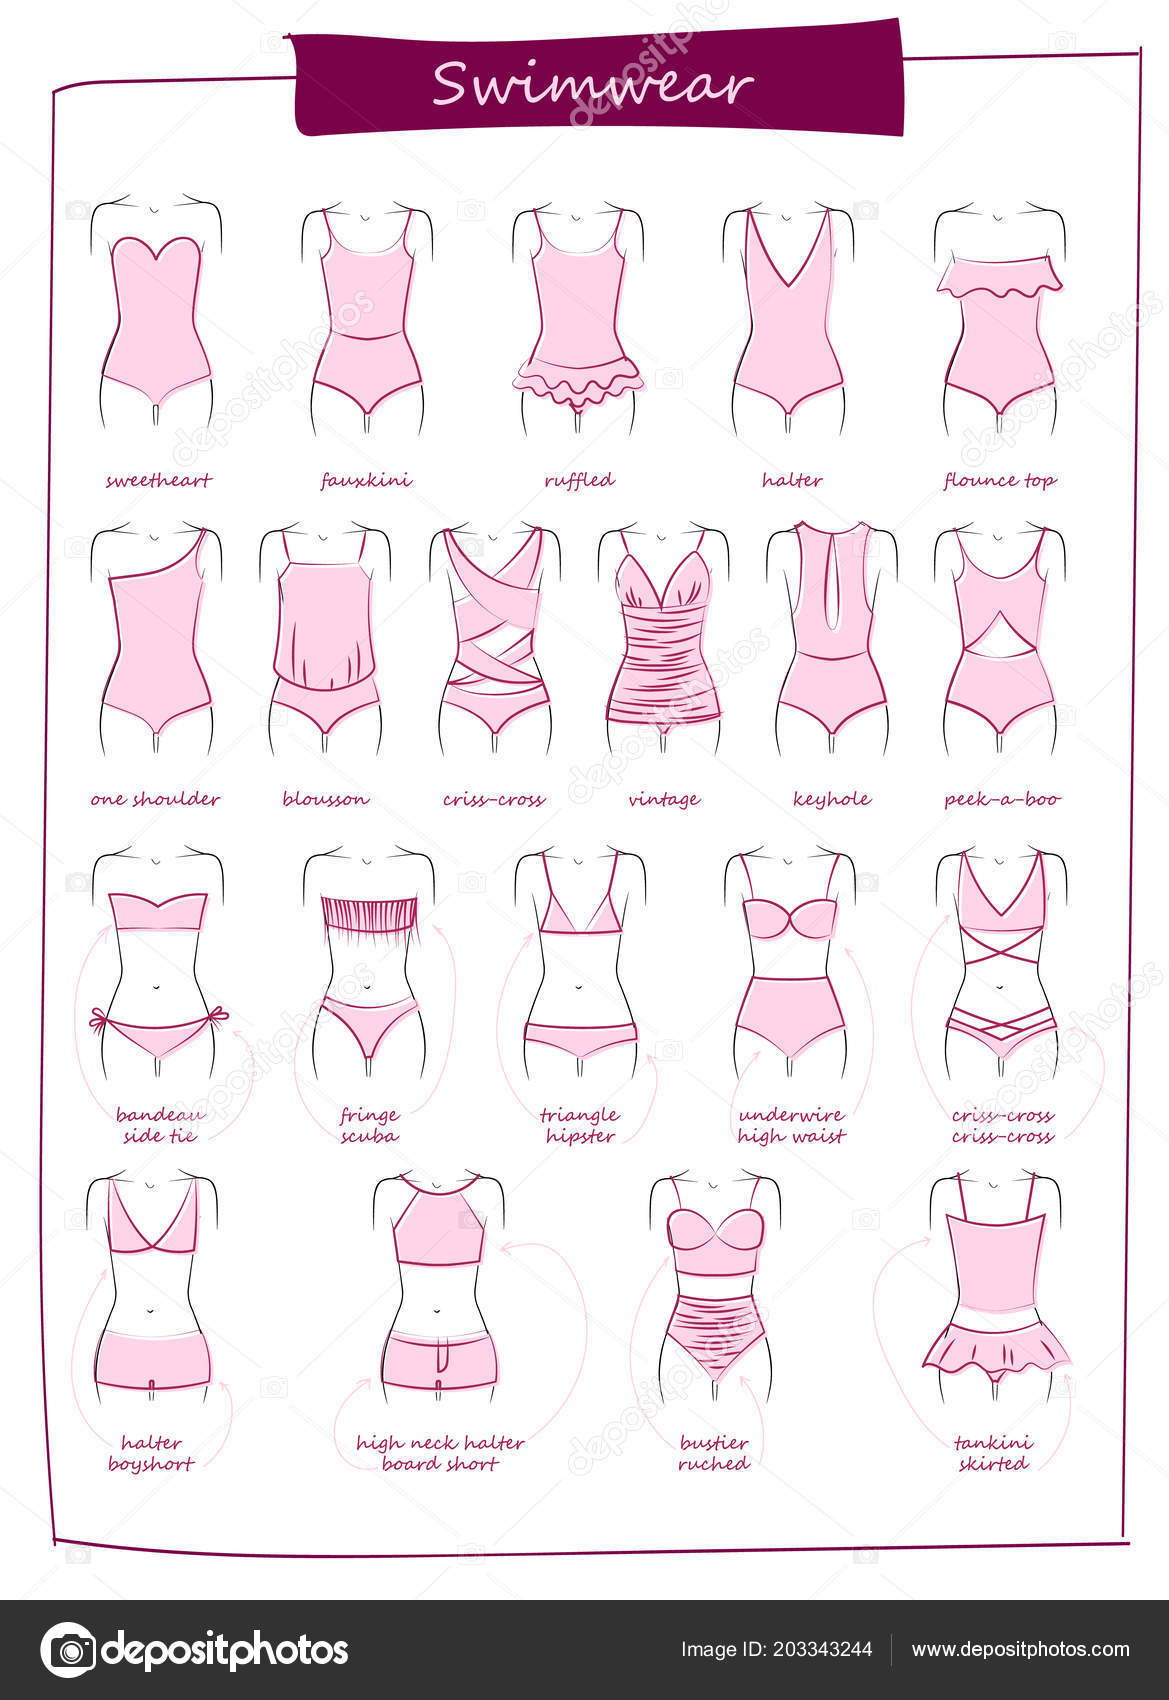 https://st4.depositphotos.com/6193528/20334/v/1600/depositphotos_203343244-stock-illustration-different-kinds-swimsuits-swimsuits-set.jpg